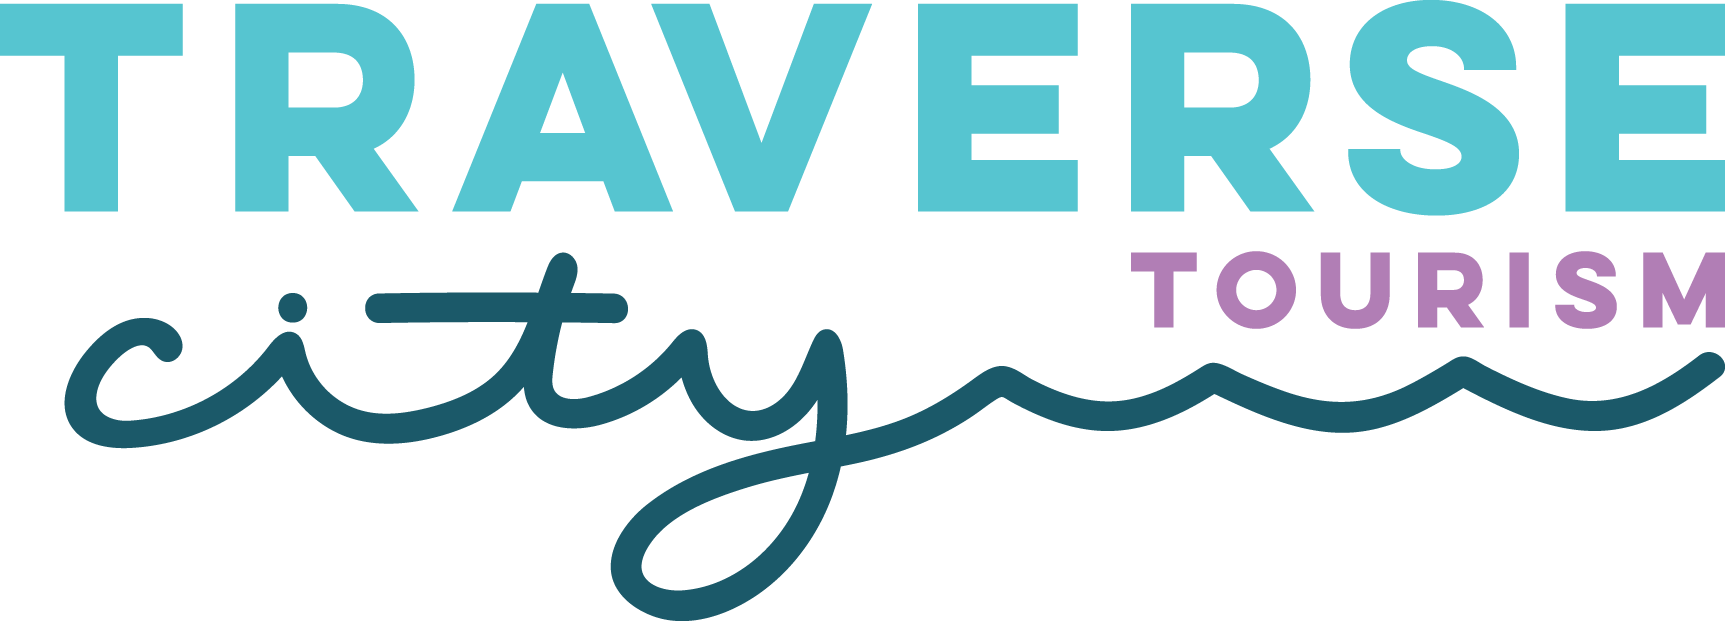 TraverseCity-Logo-Tourism-StackedPNG-CMYK